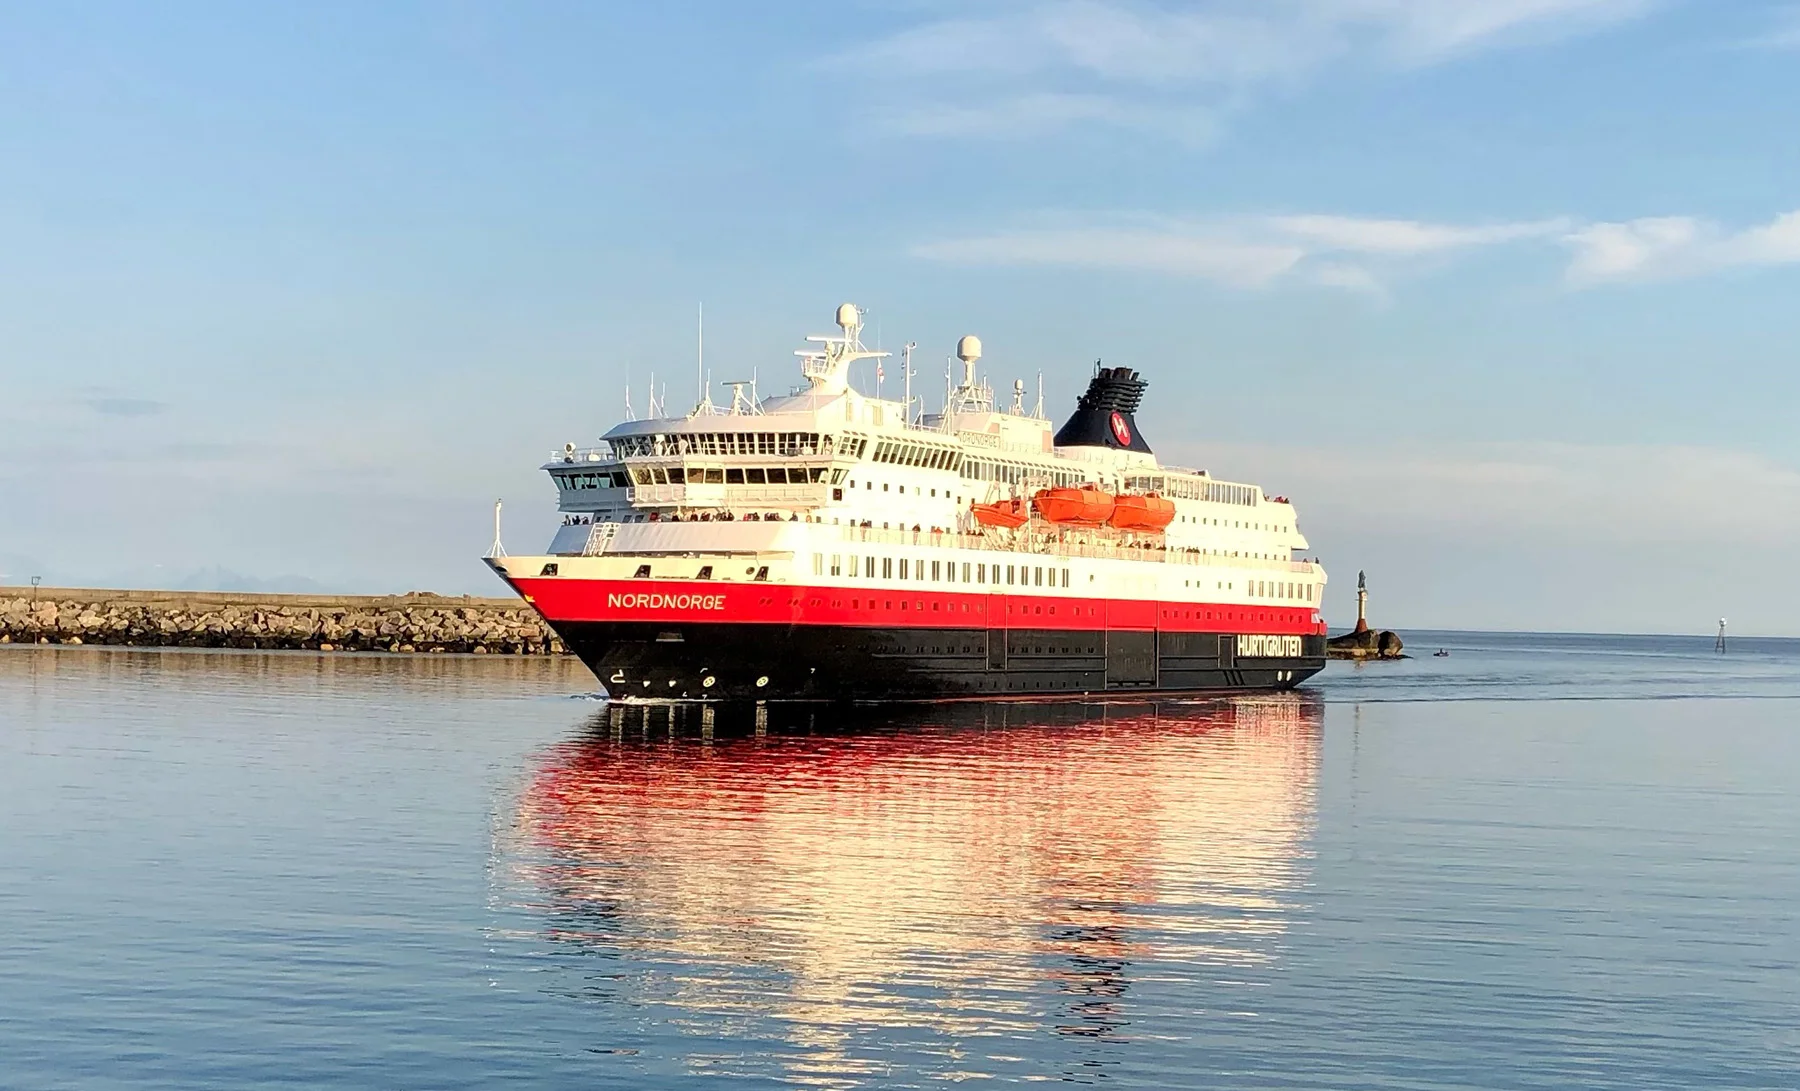 MS Nordnorge arriving in Lofoten.